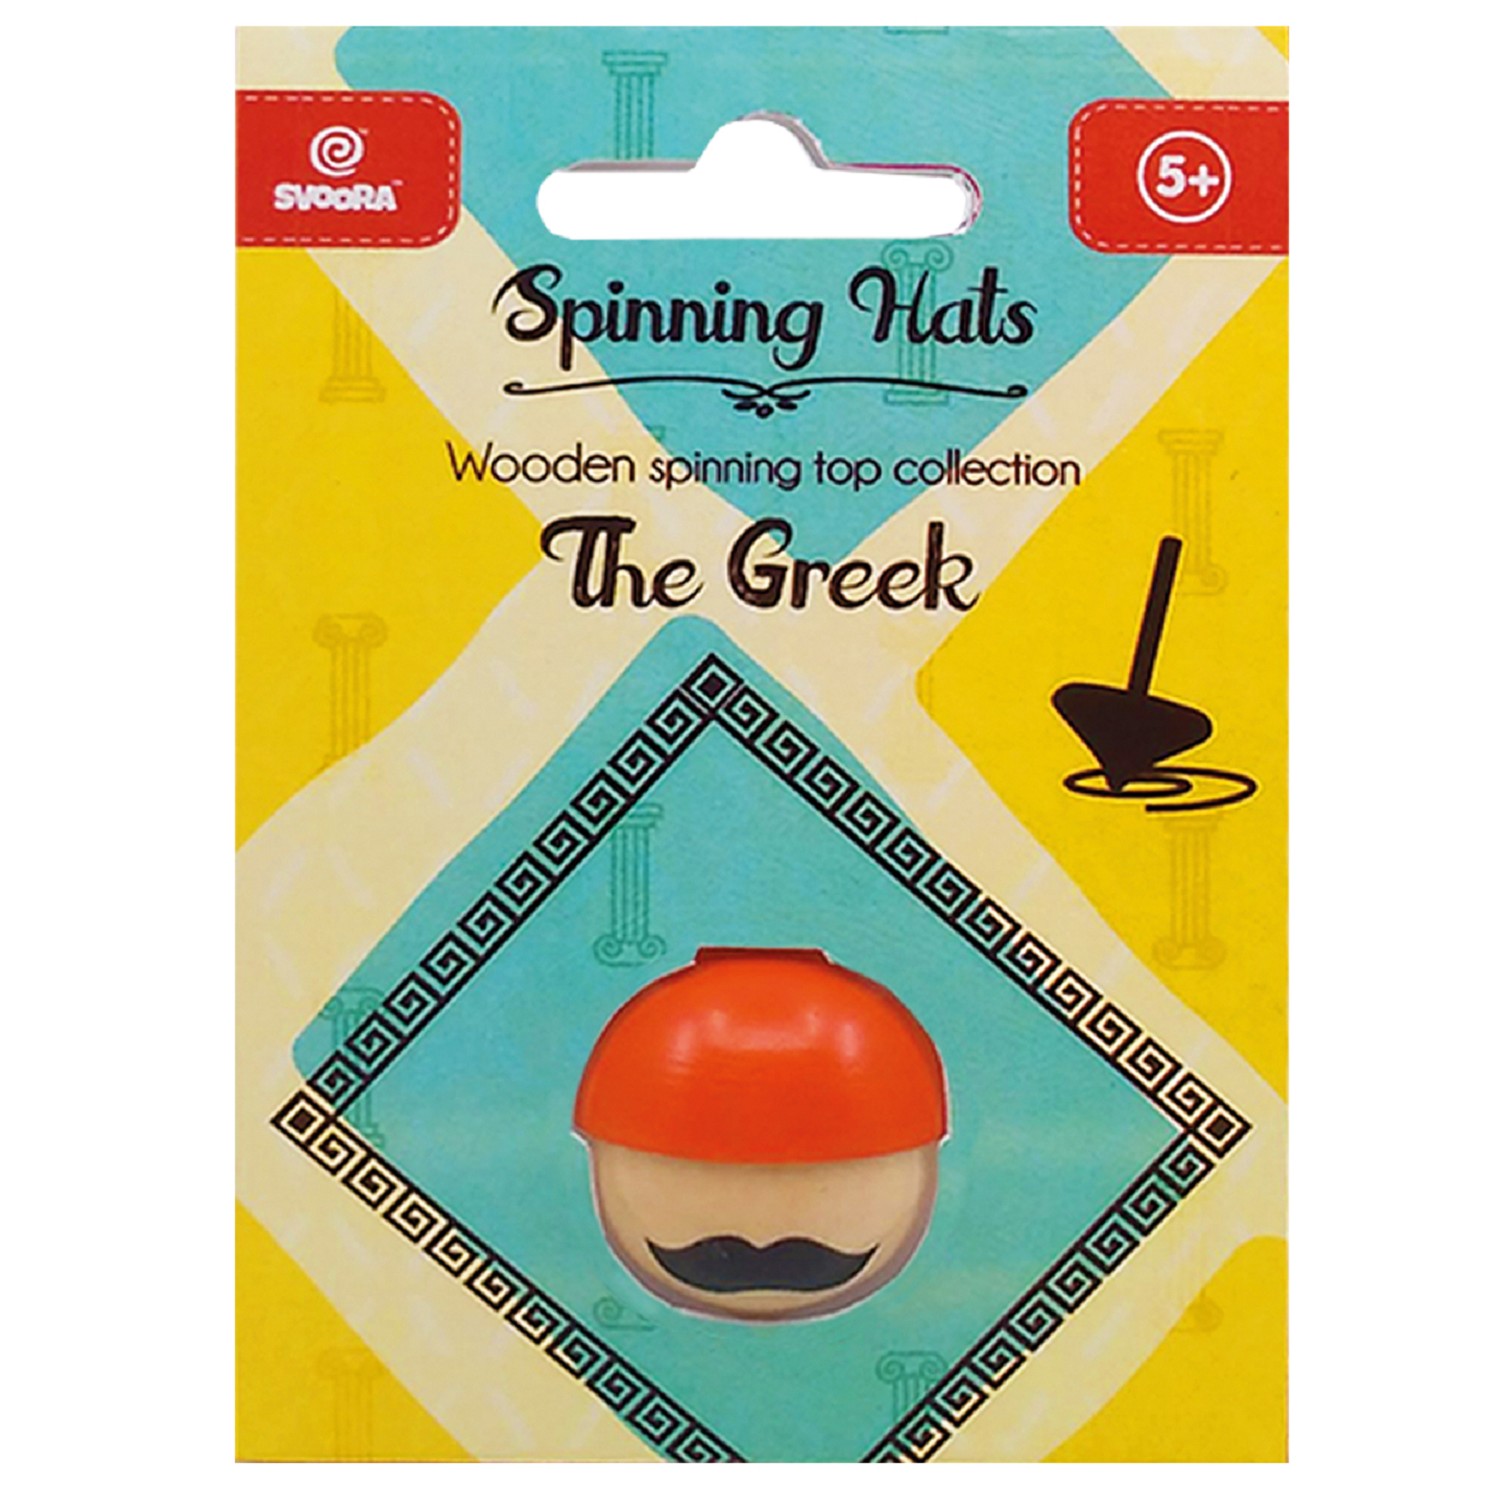 Titirez din lemn - Spinning Hats! The greek | Svoora